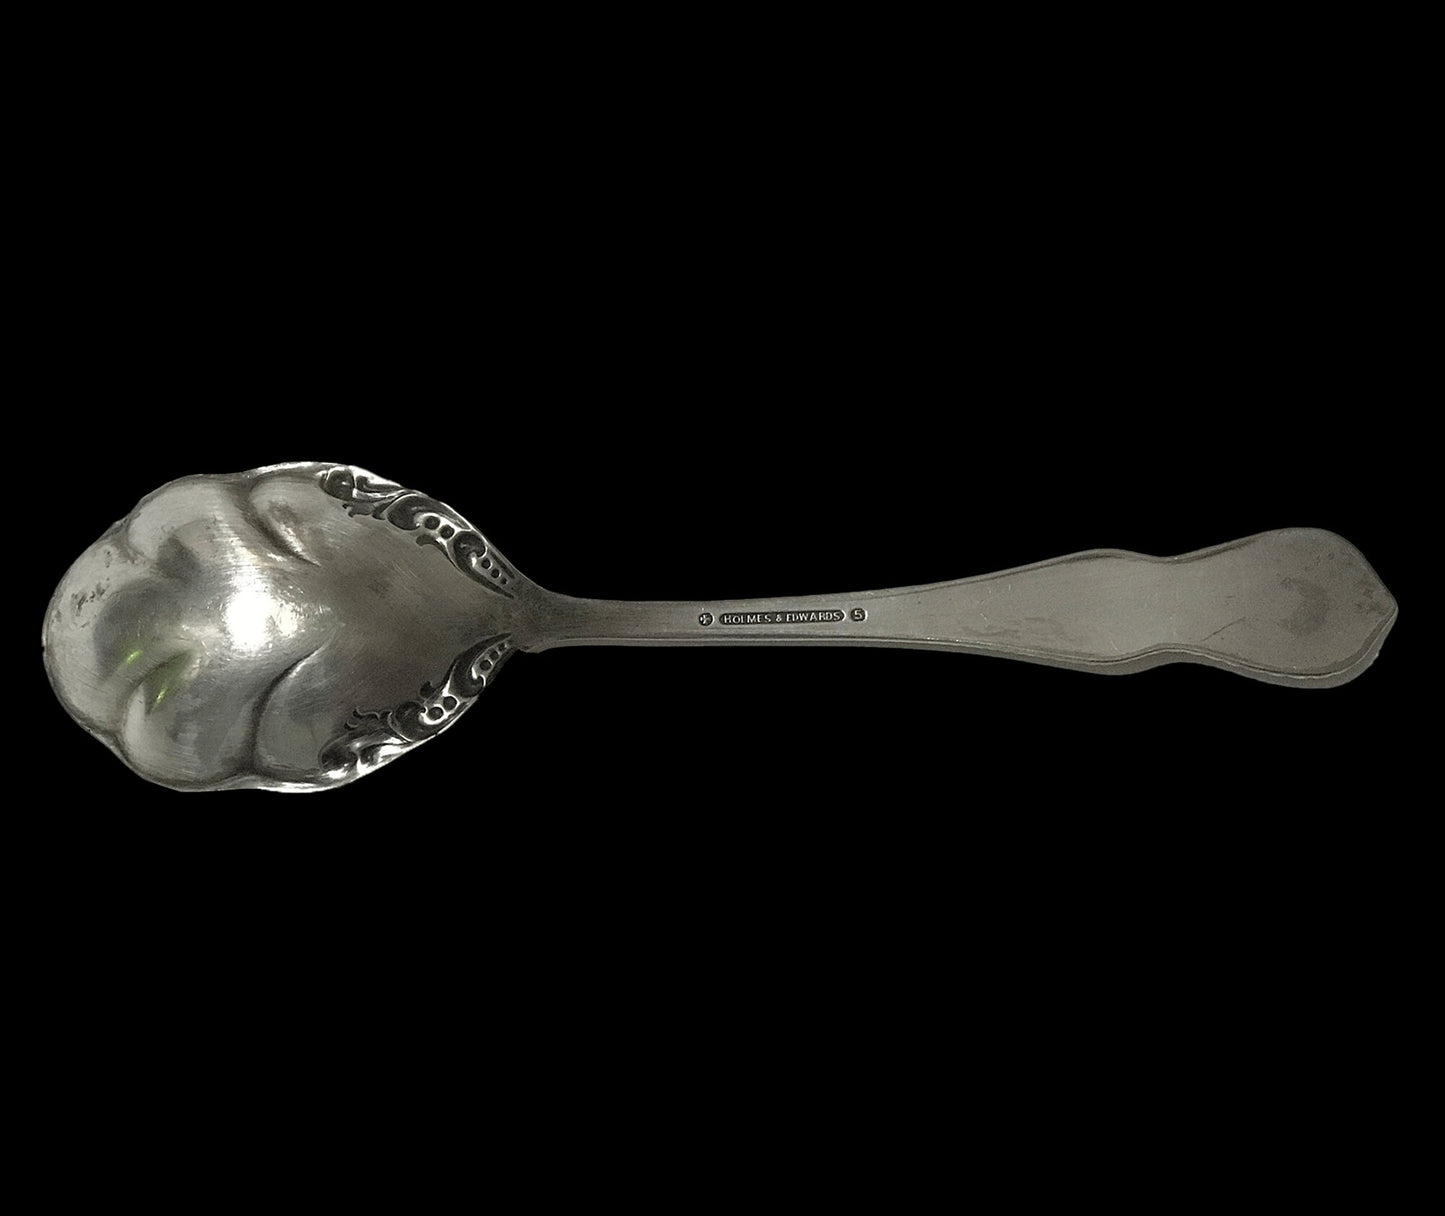 Holmes & Edwards silver sugar spoon, facing down showing logo